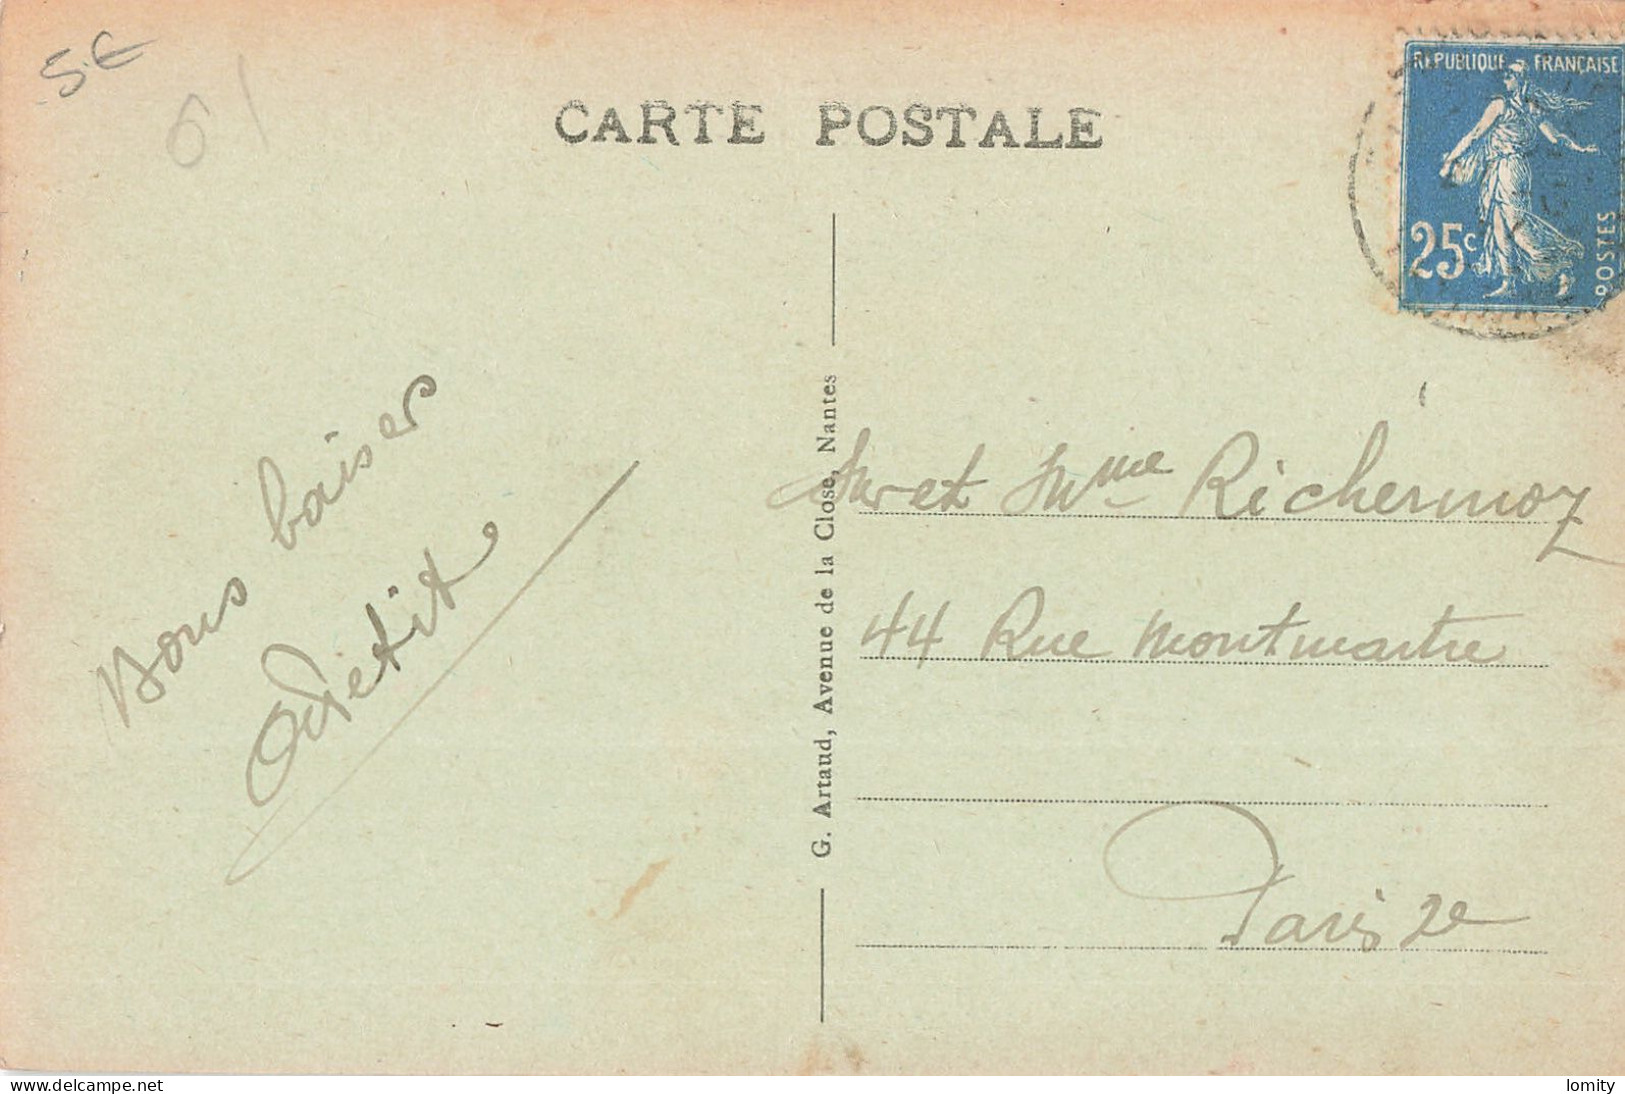 Destockage lot de 17 cartes postales CPA de l' Orne Bagnoles Alençon